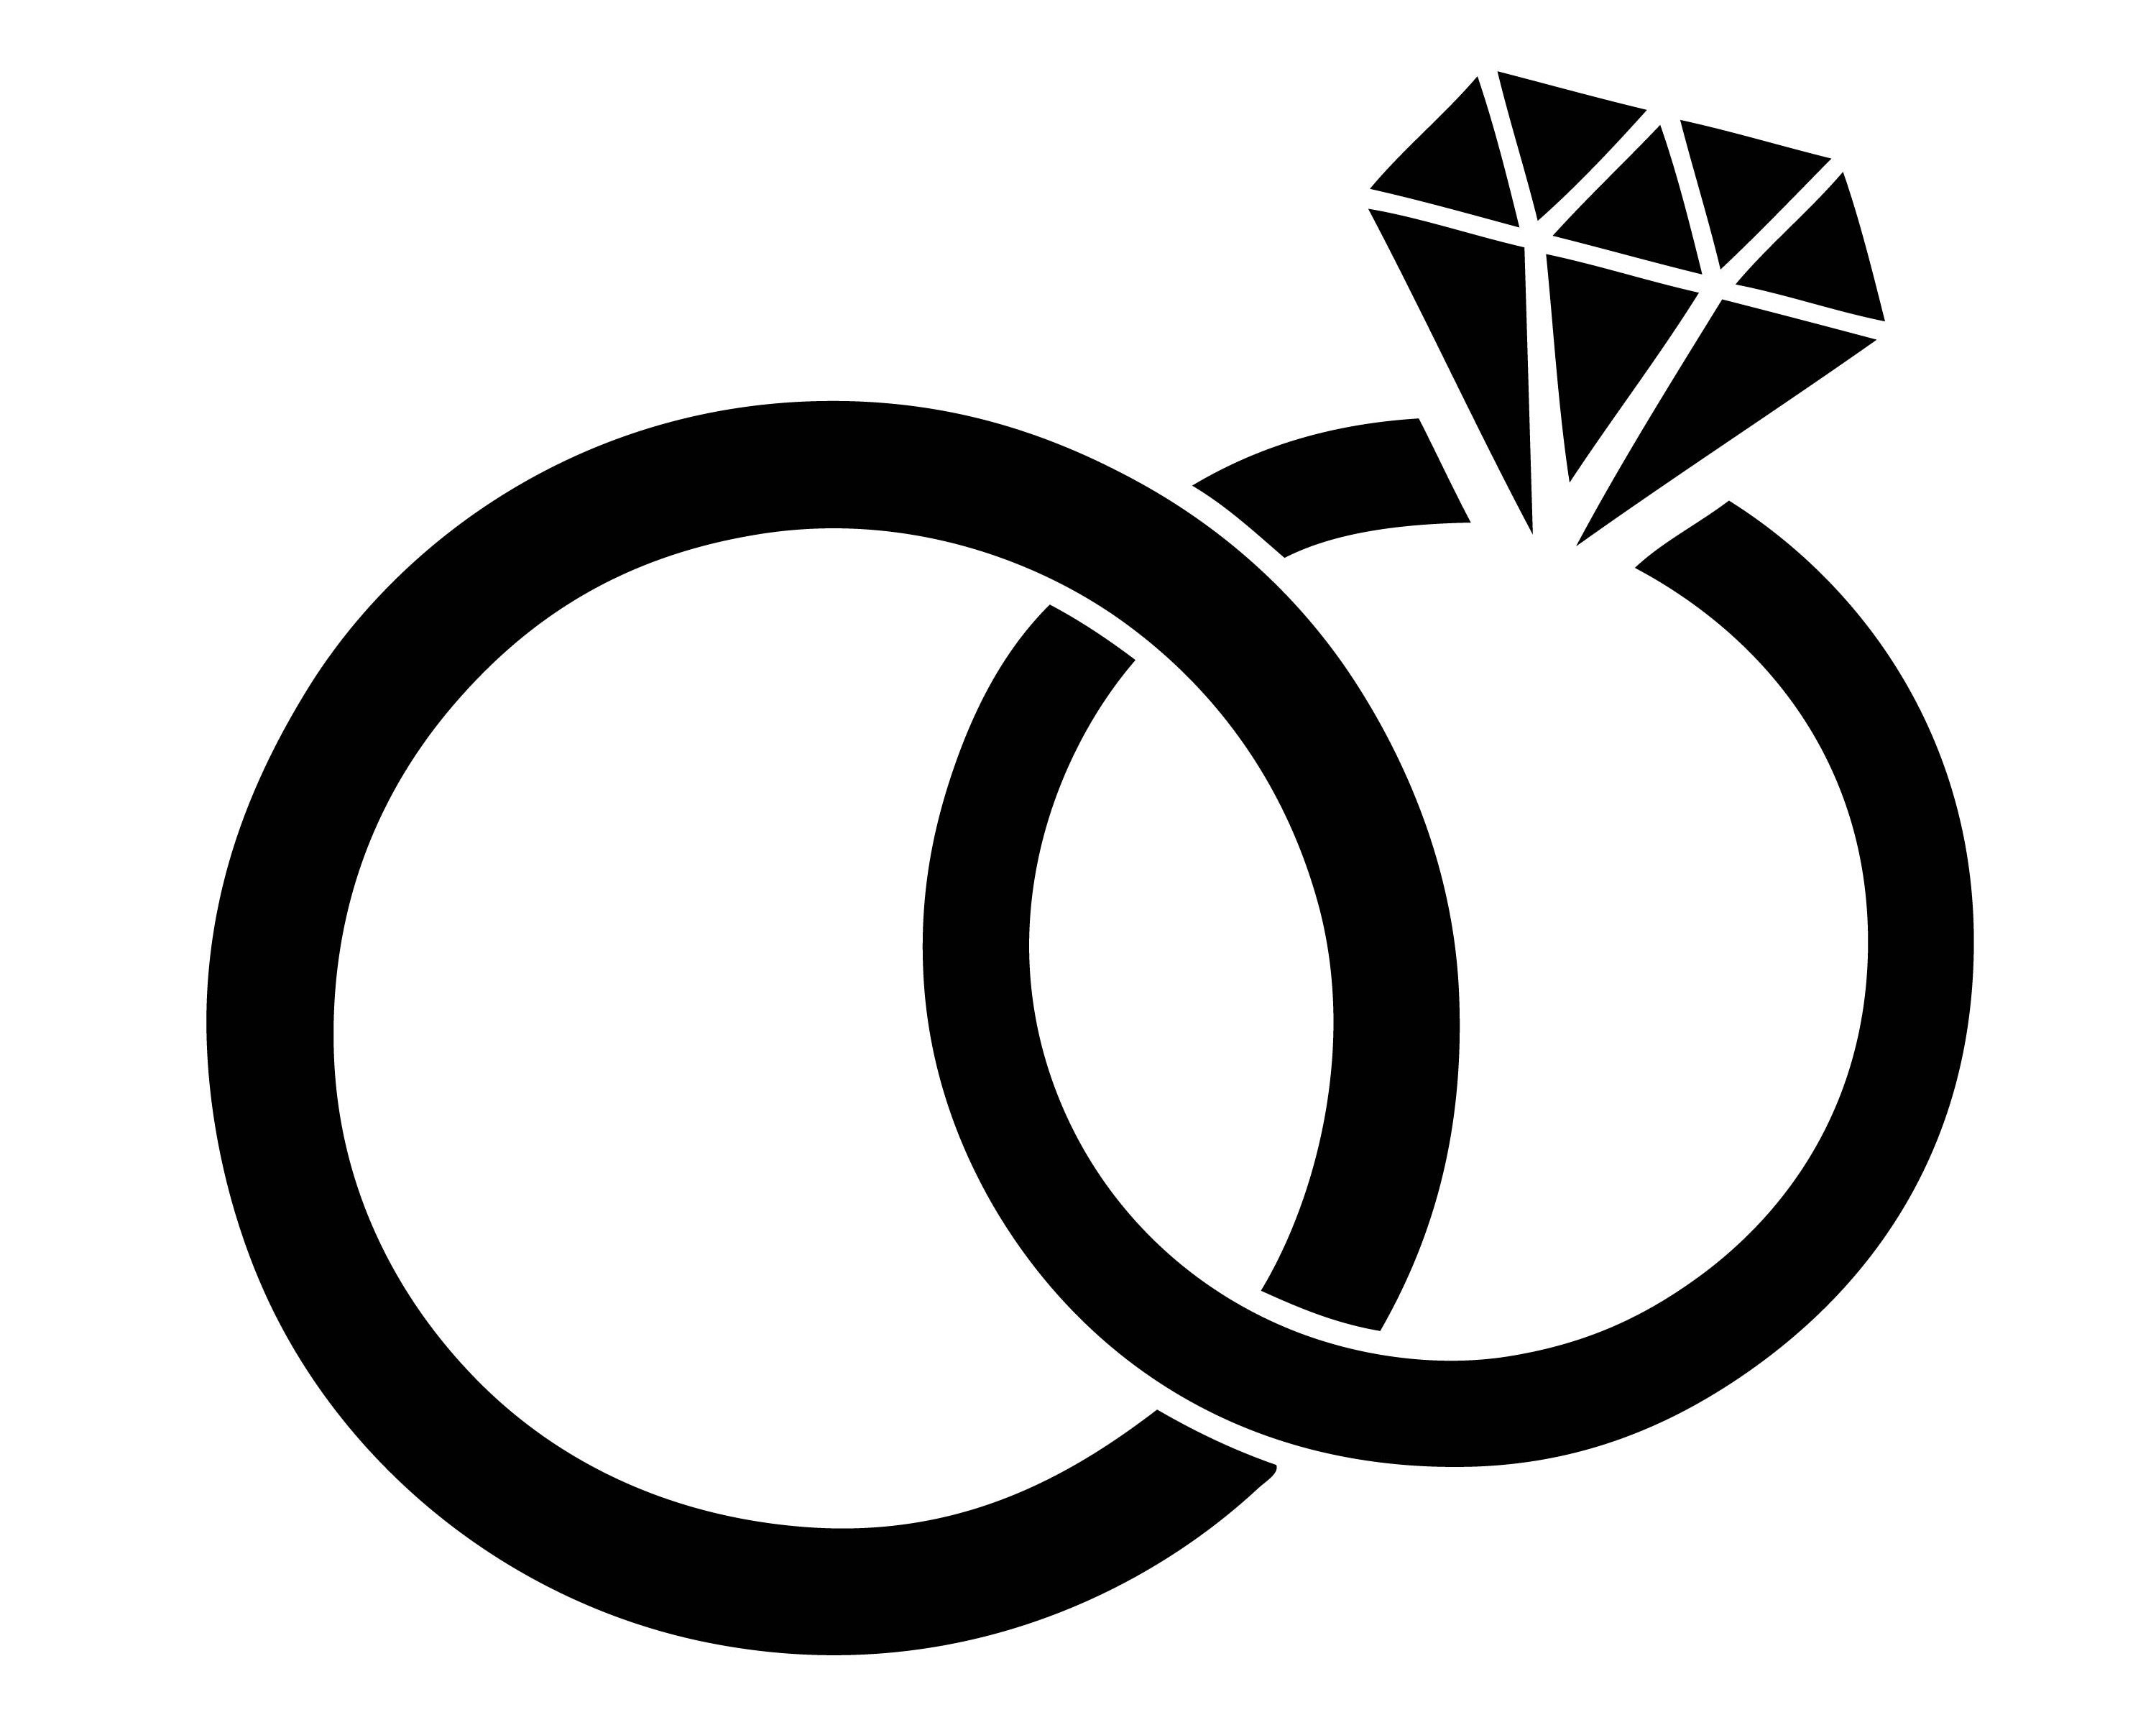 Wedding Rings Diamond Shaped Proposal Love Marriage Jewelry Celebrate Engag...